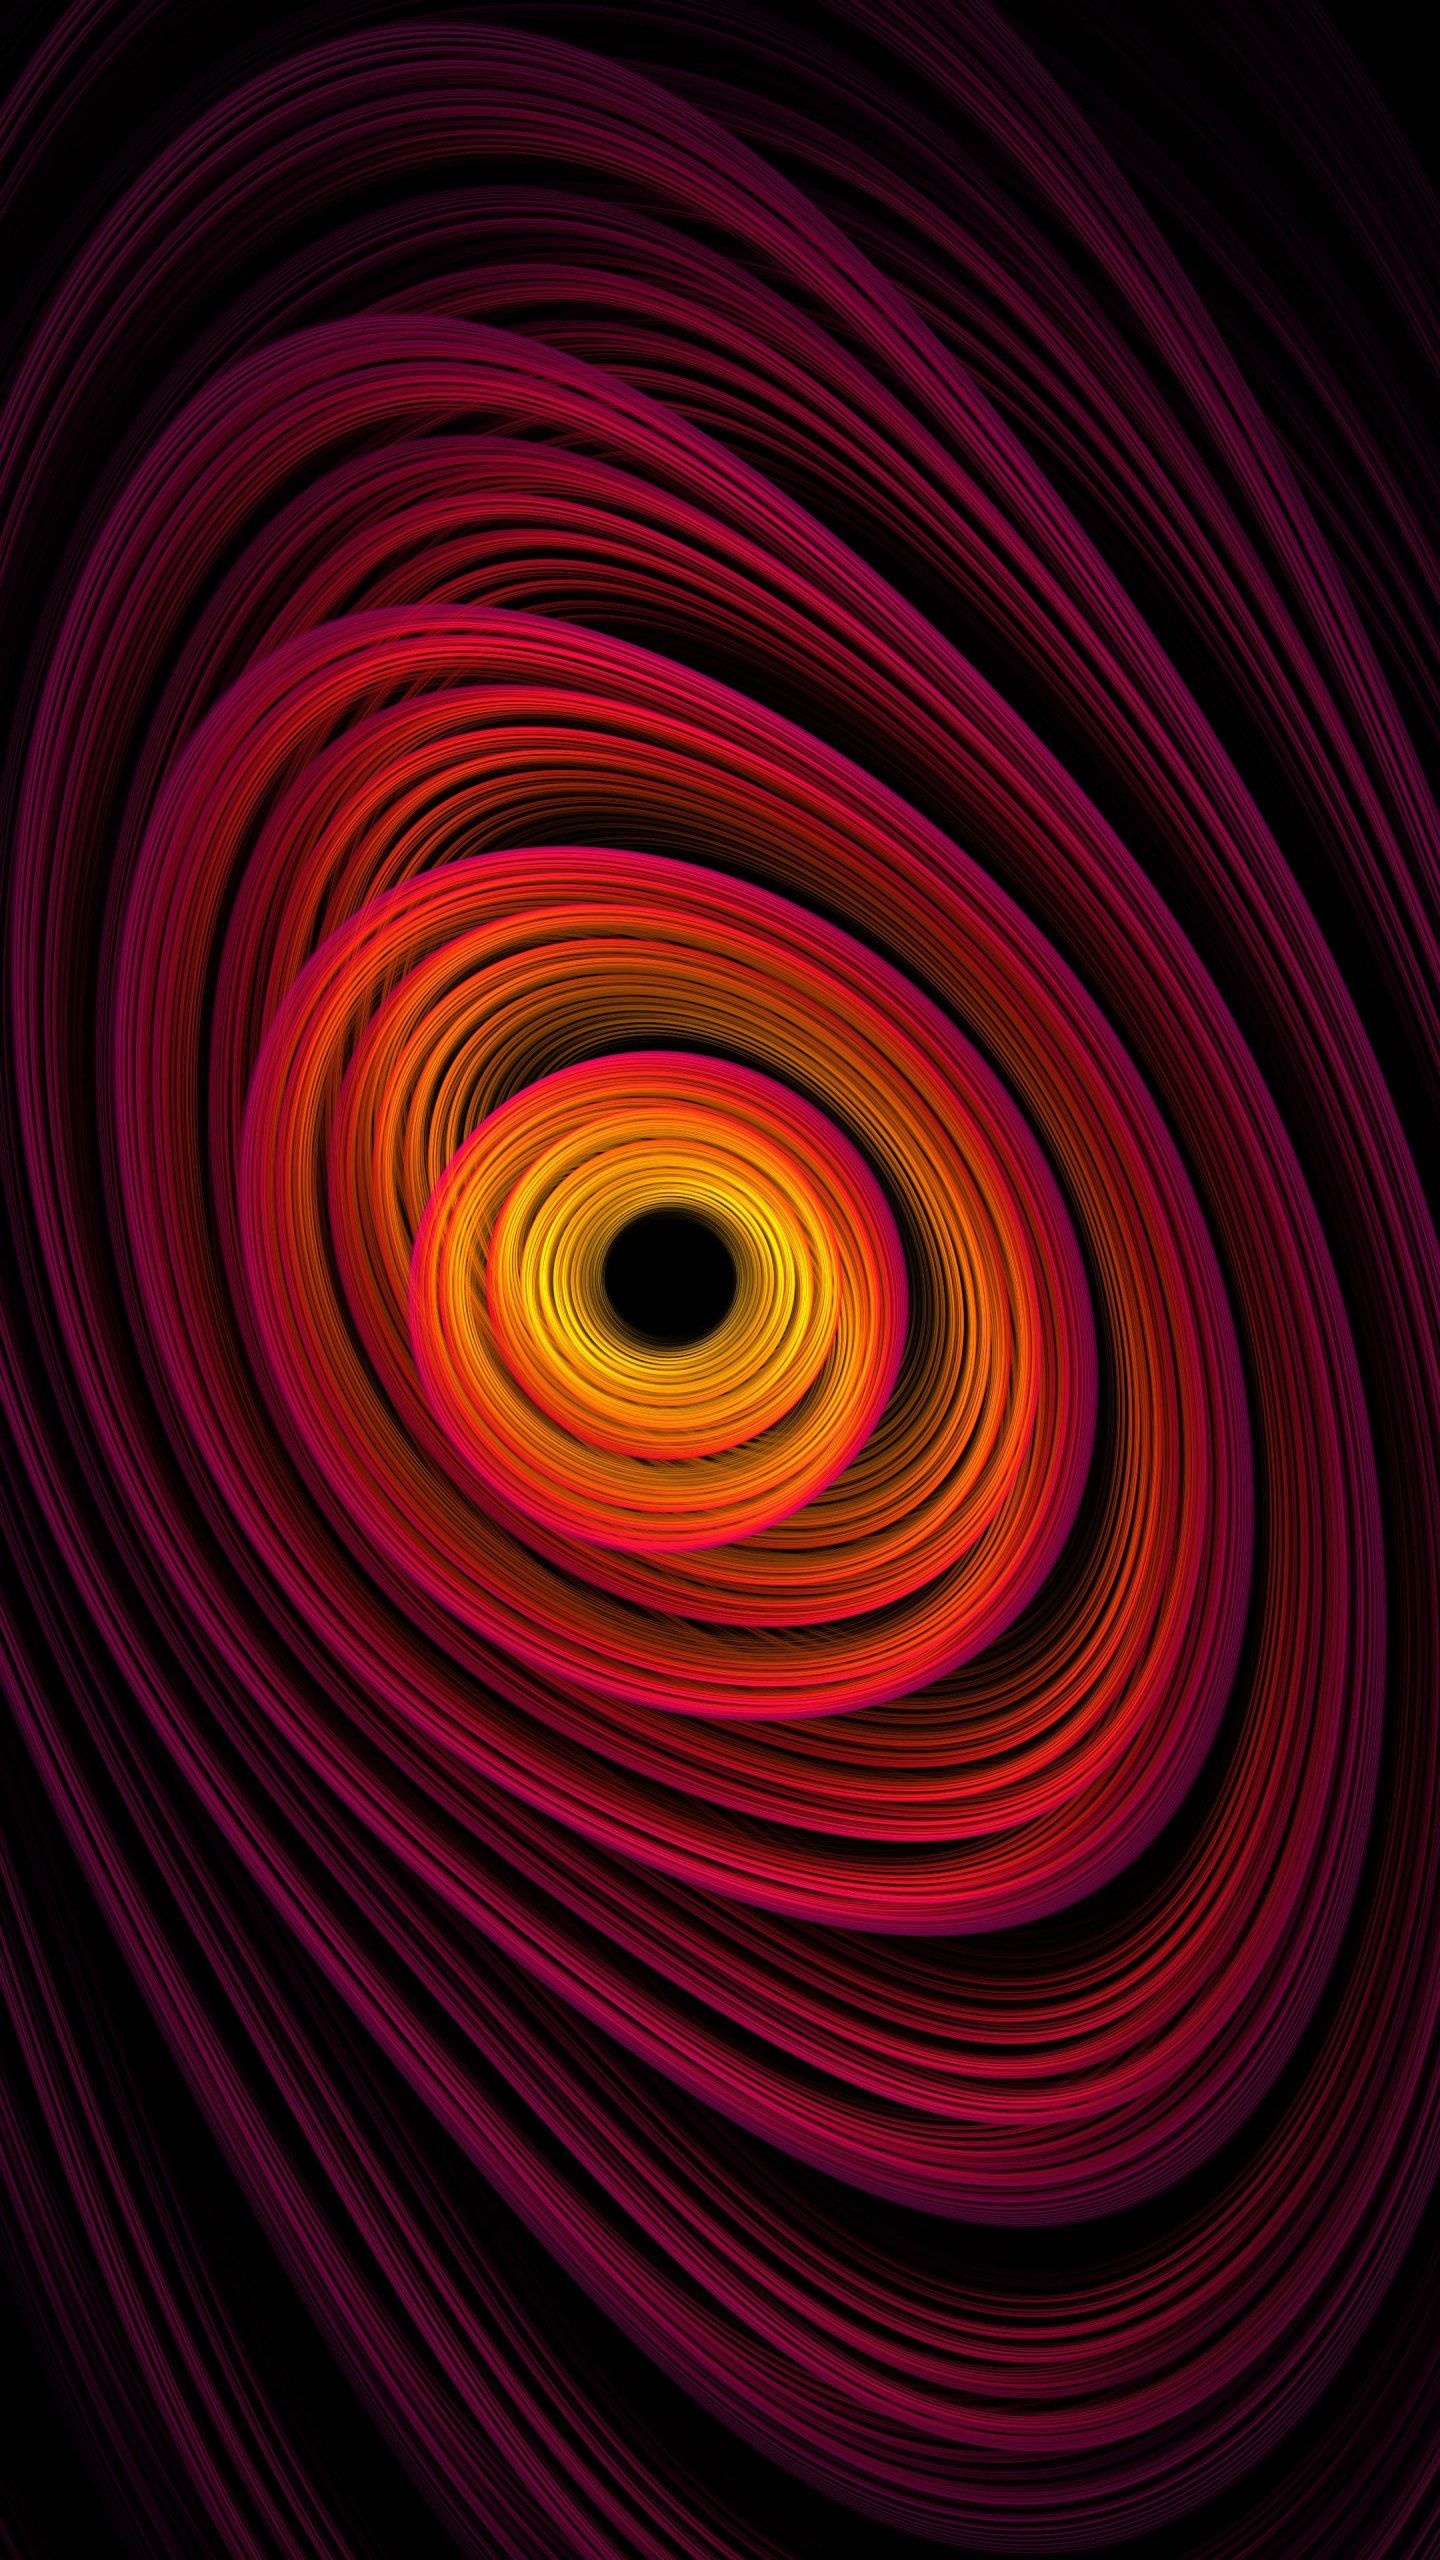 Golden Ratio: Abstract art, Spiral, Violet, Orange, Yellow, Lines. Symmetry, Circles. 1440x2560 HD Wallpaper.